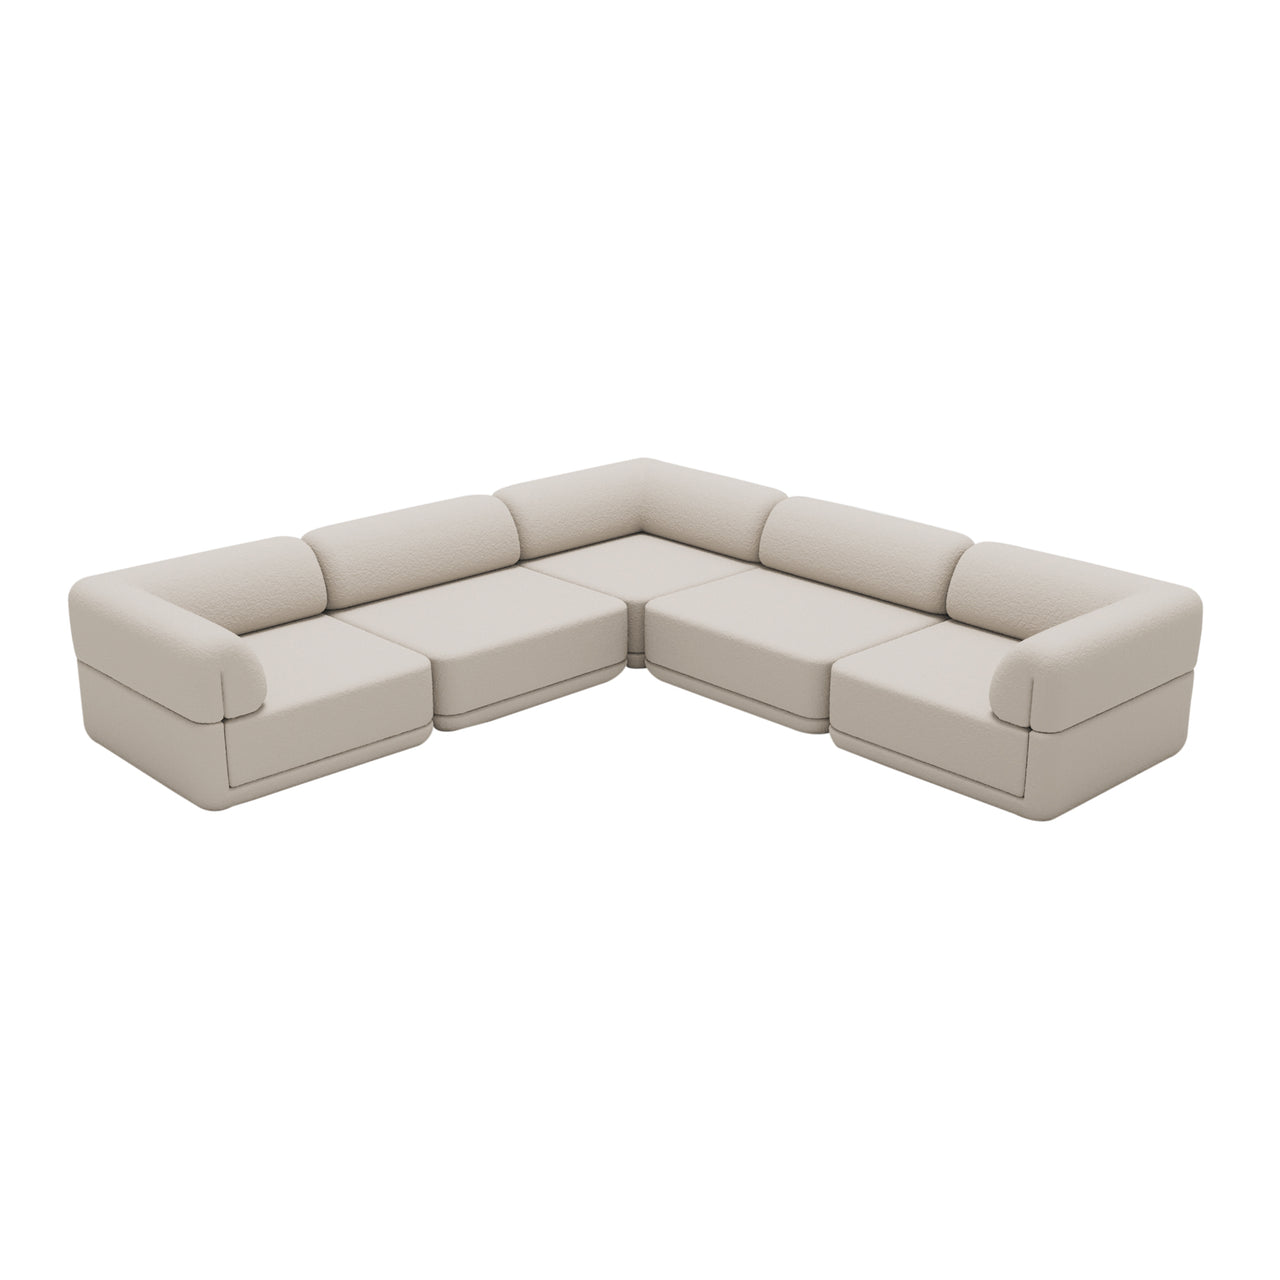 Cube Modular Sofa: Configuration 7 + Boucle Cream